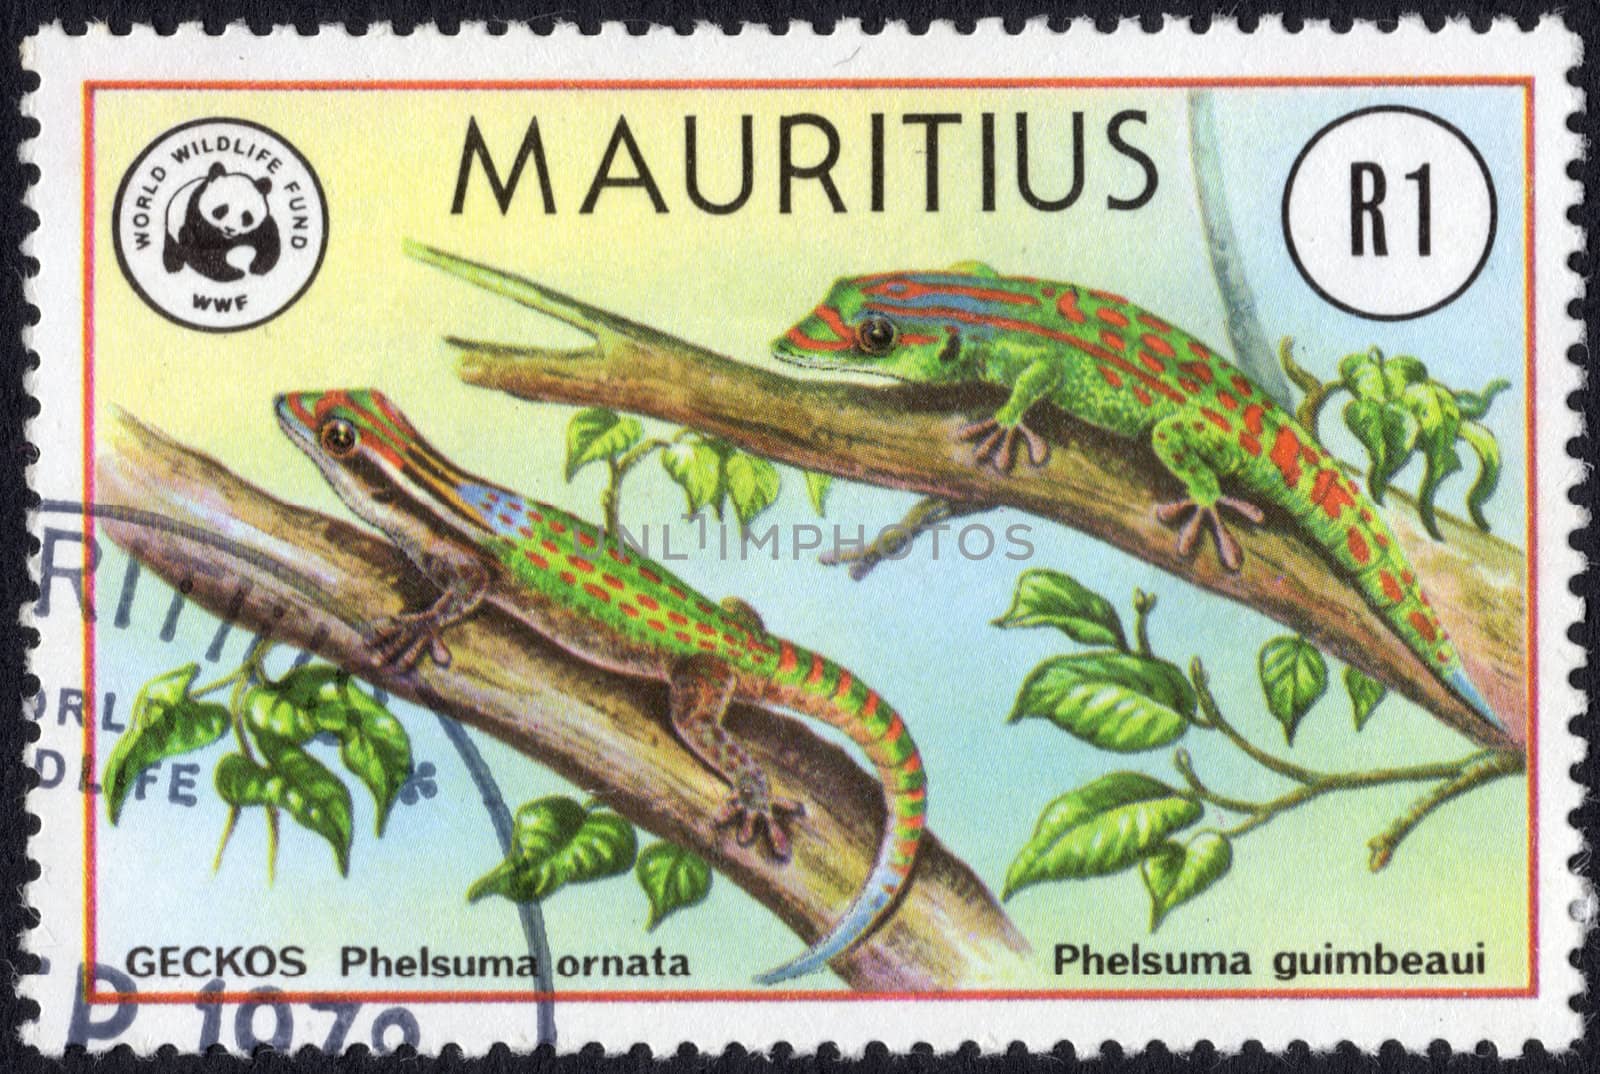 A Postage Stamp from Mauritius showing an Ornate Day Gecko (Phelsuma Ornata) and an Orange spotted day gecko(Phelsuma guimbeaui)